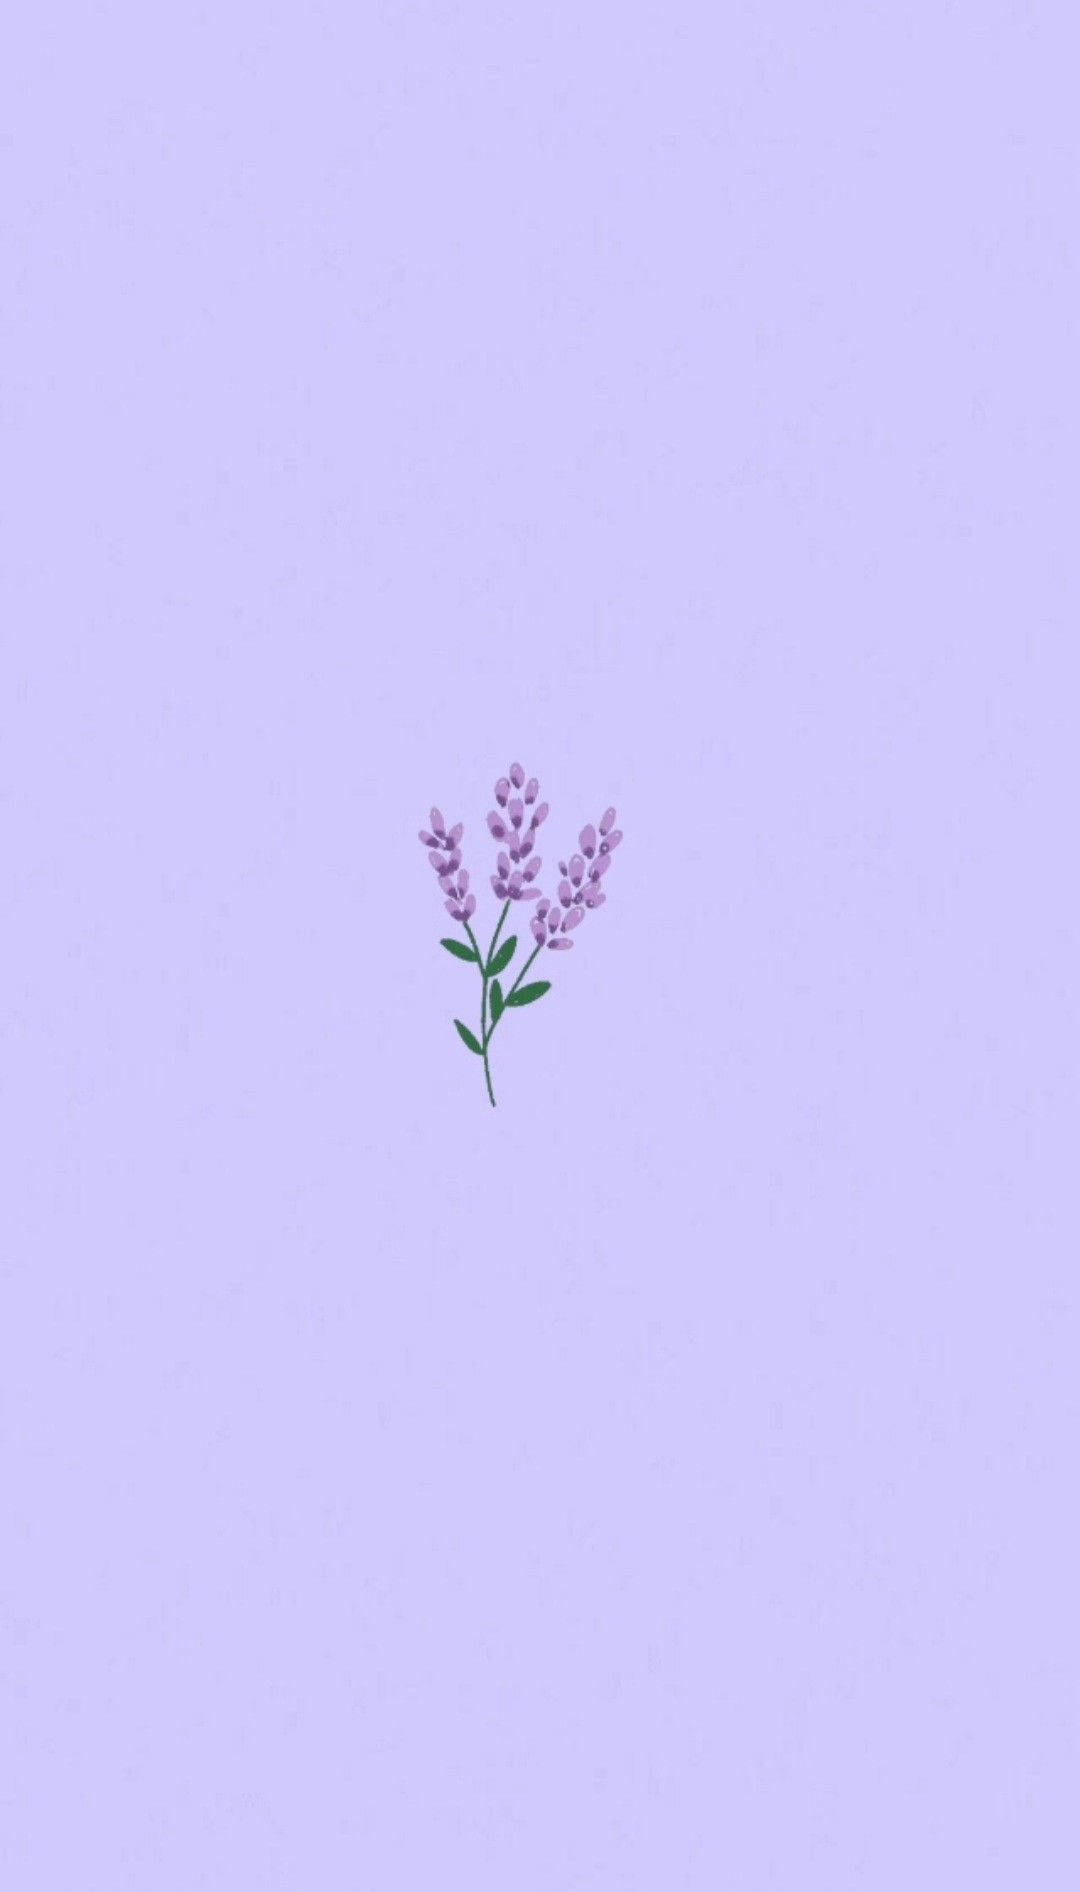 Aesthetic and Beautiful Purple Flower Wallpaper